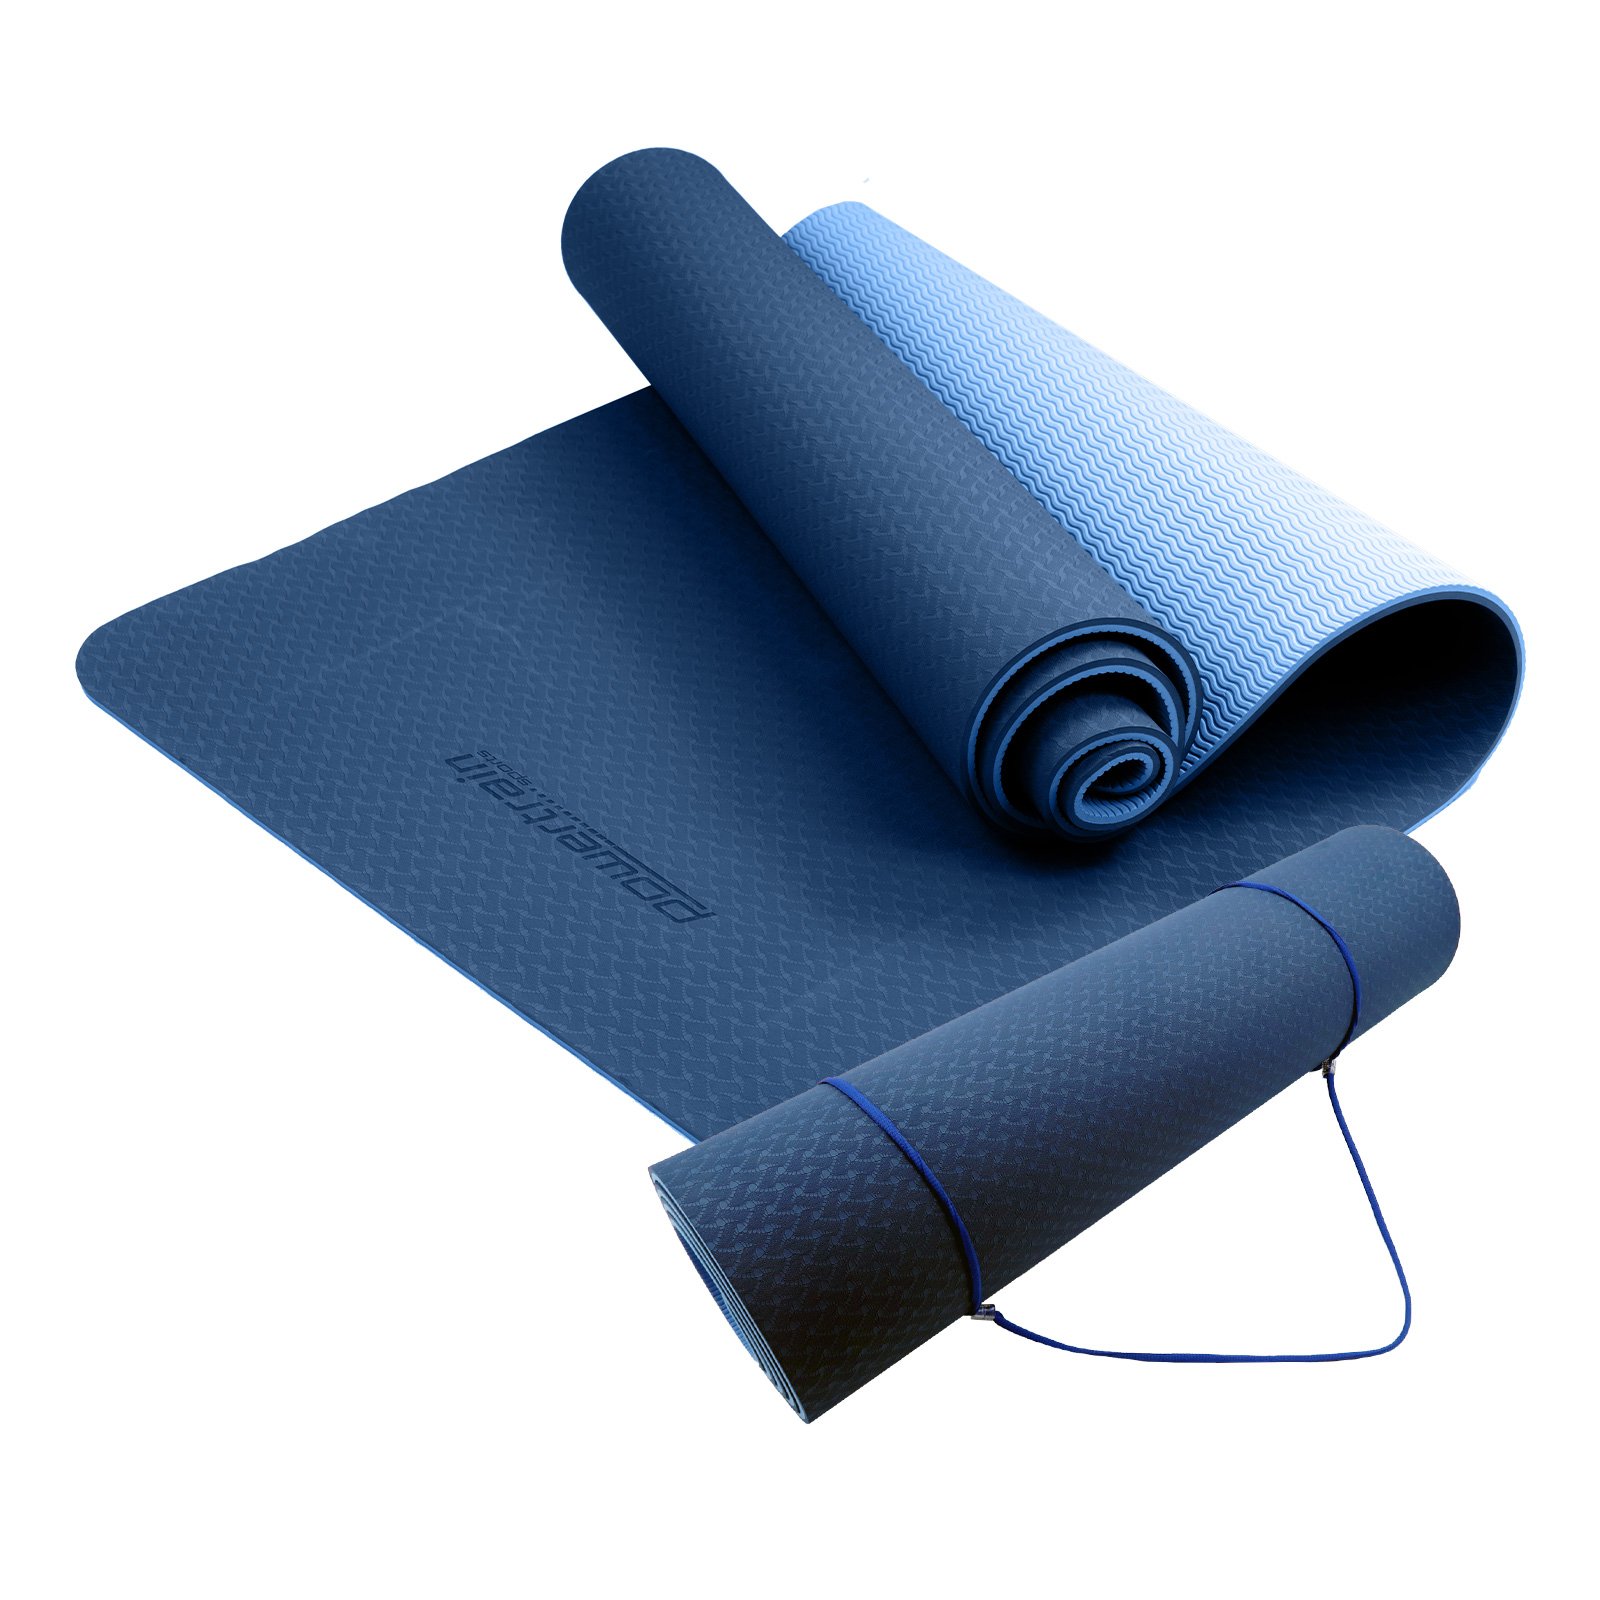 Powertrain Eco-Friendly TPE Pilates Exercise Yoga Mat 8mm - Dark Blue 2